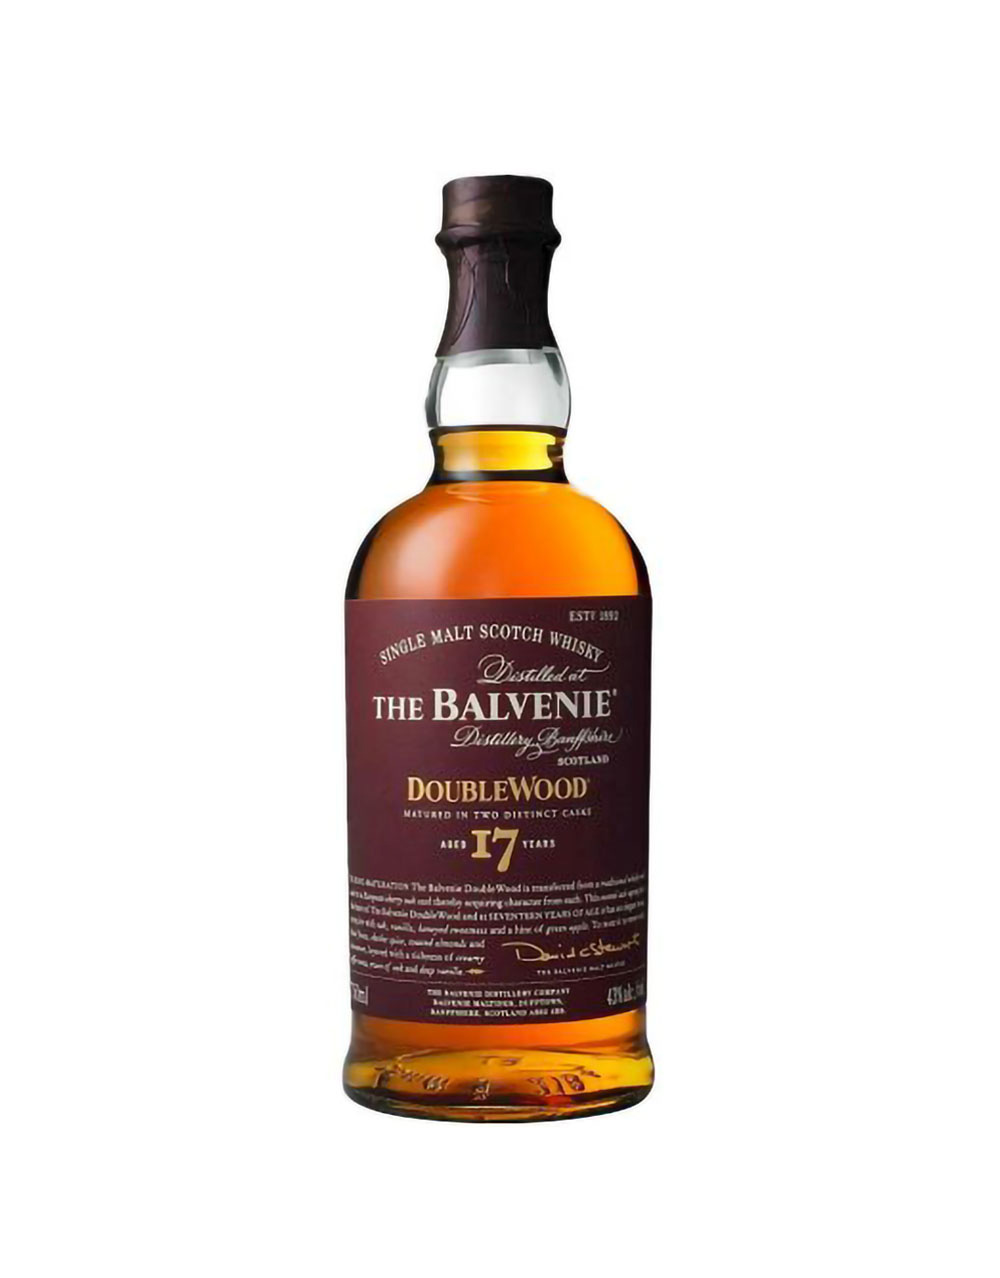 The Balvenie DoubleWood 17 Year Old Single Malt Scotch Whisky